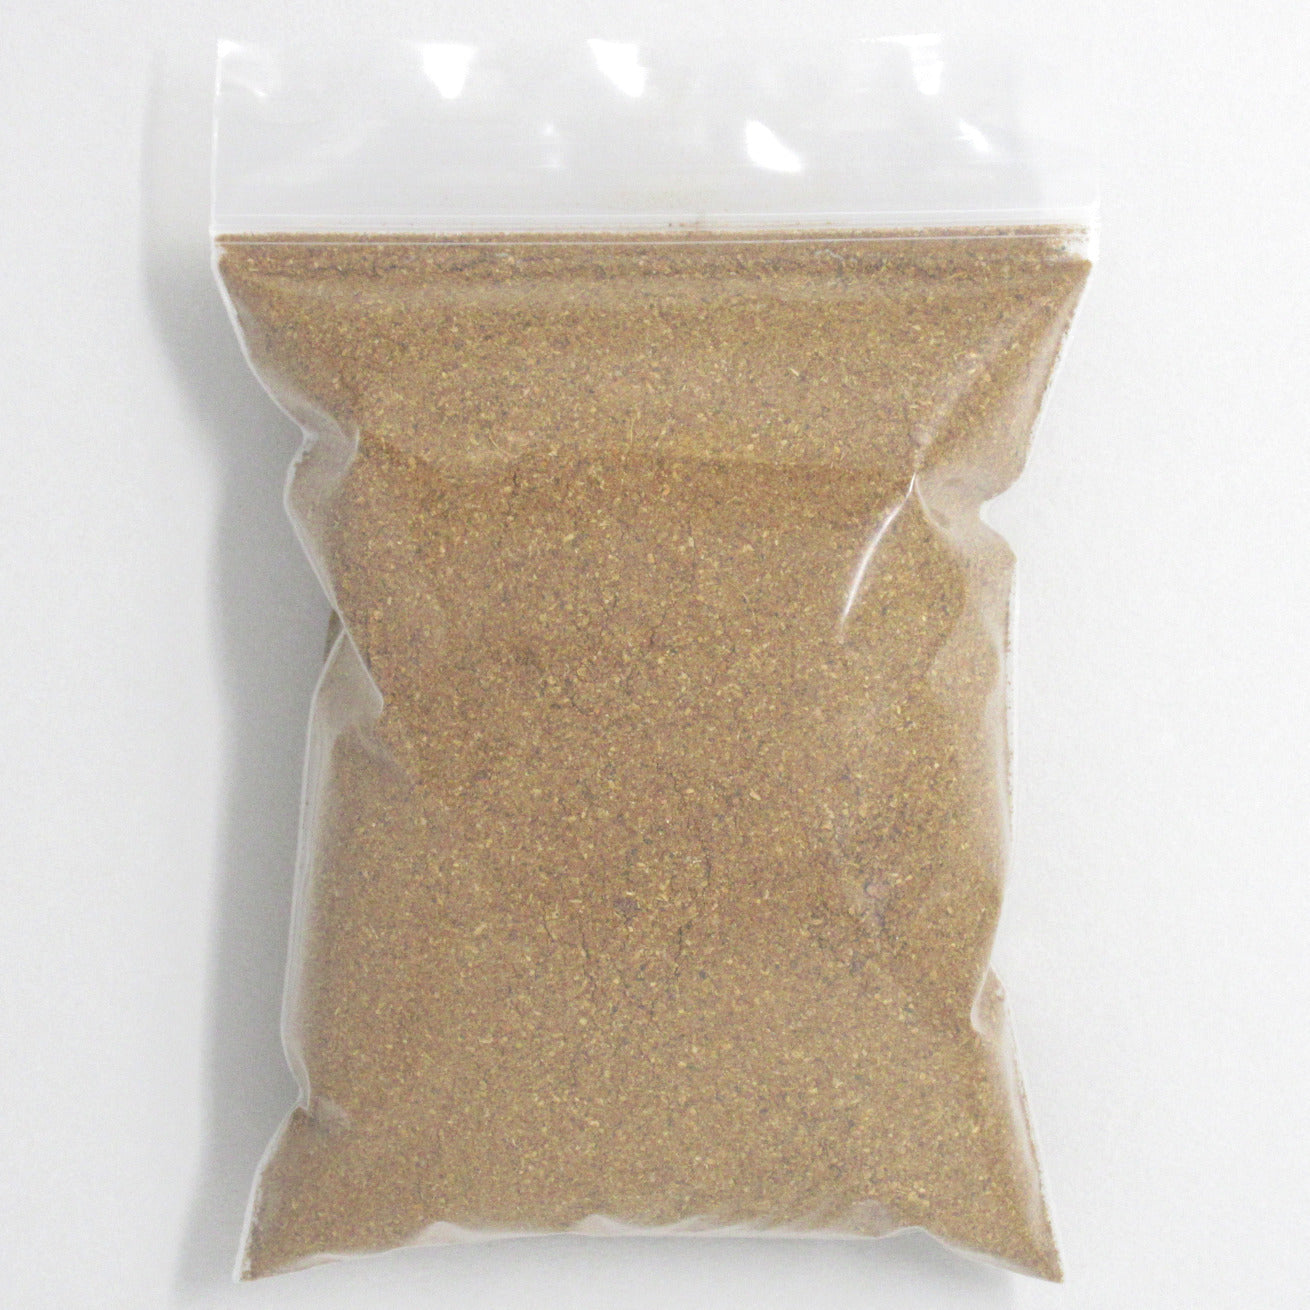 Flour Barrel product image - Garam Masala